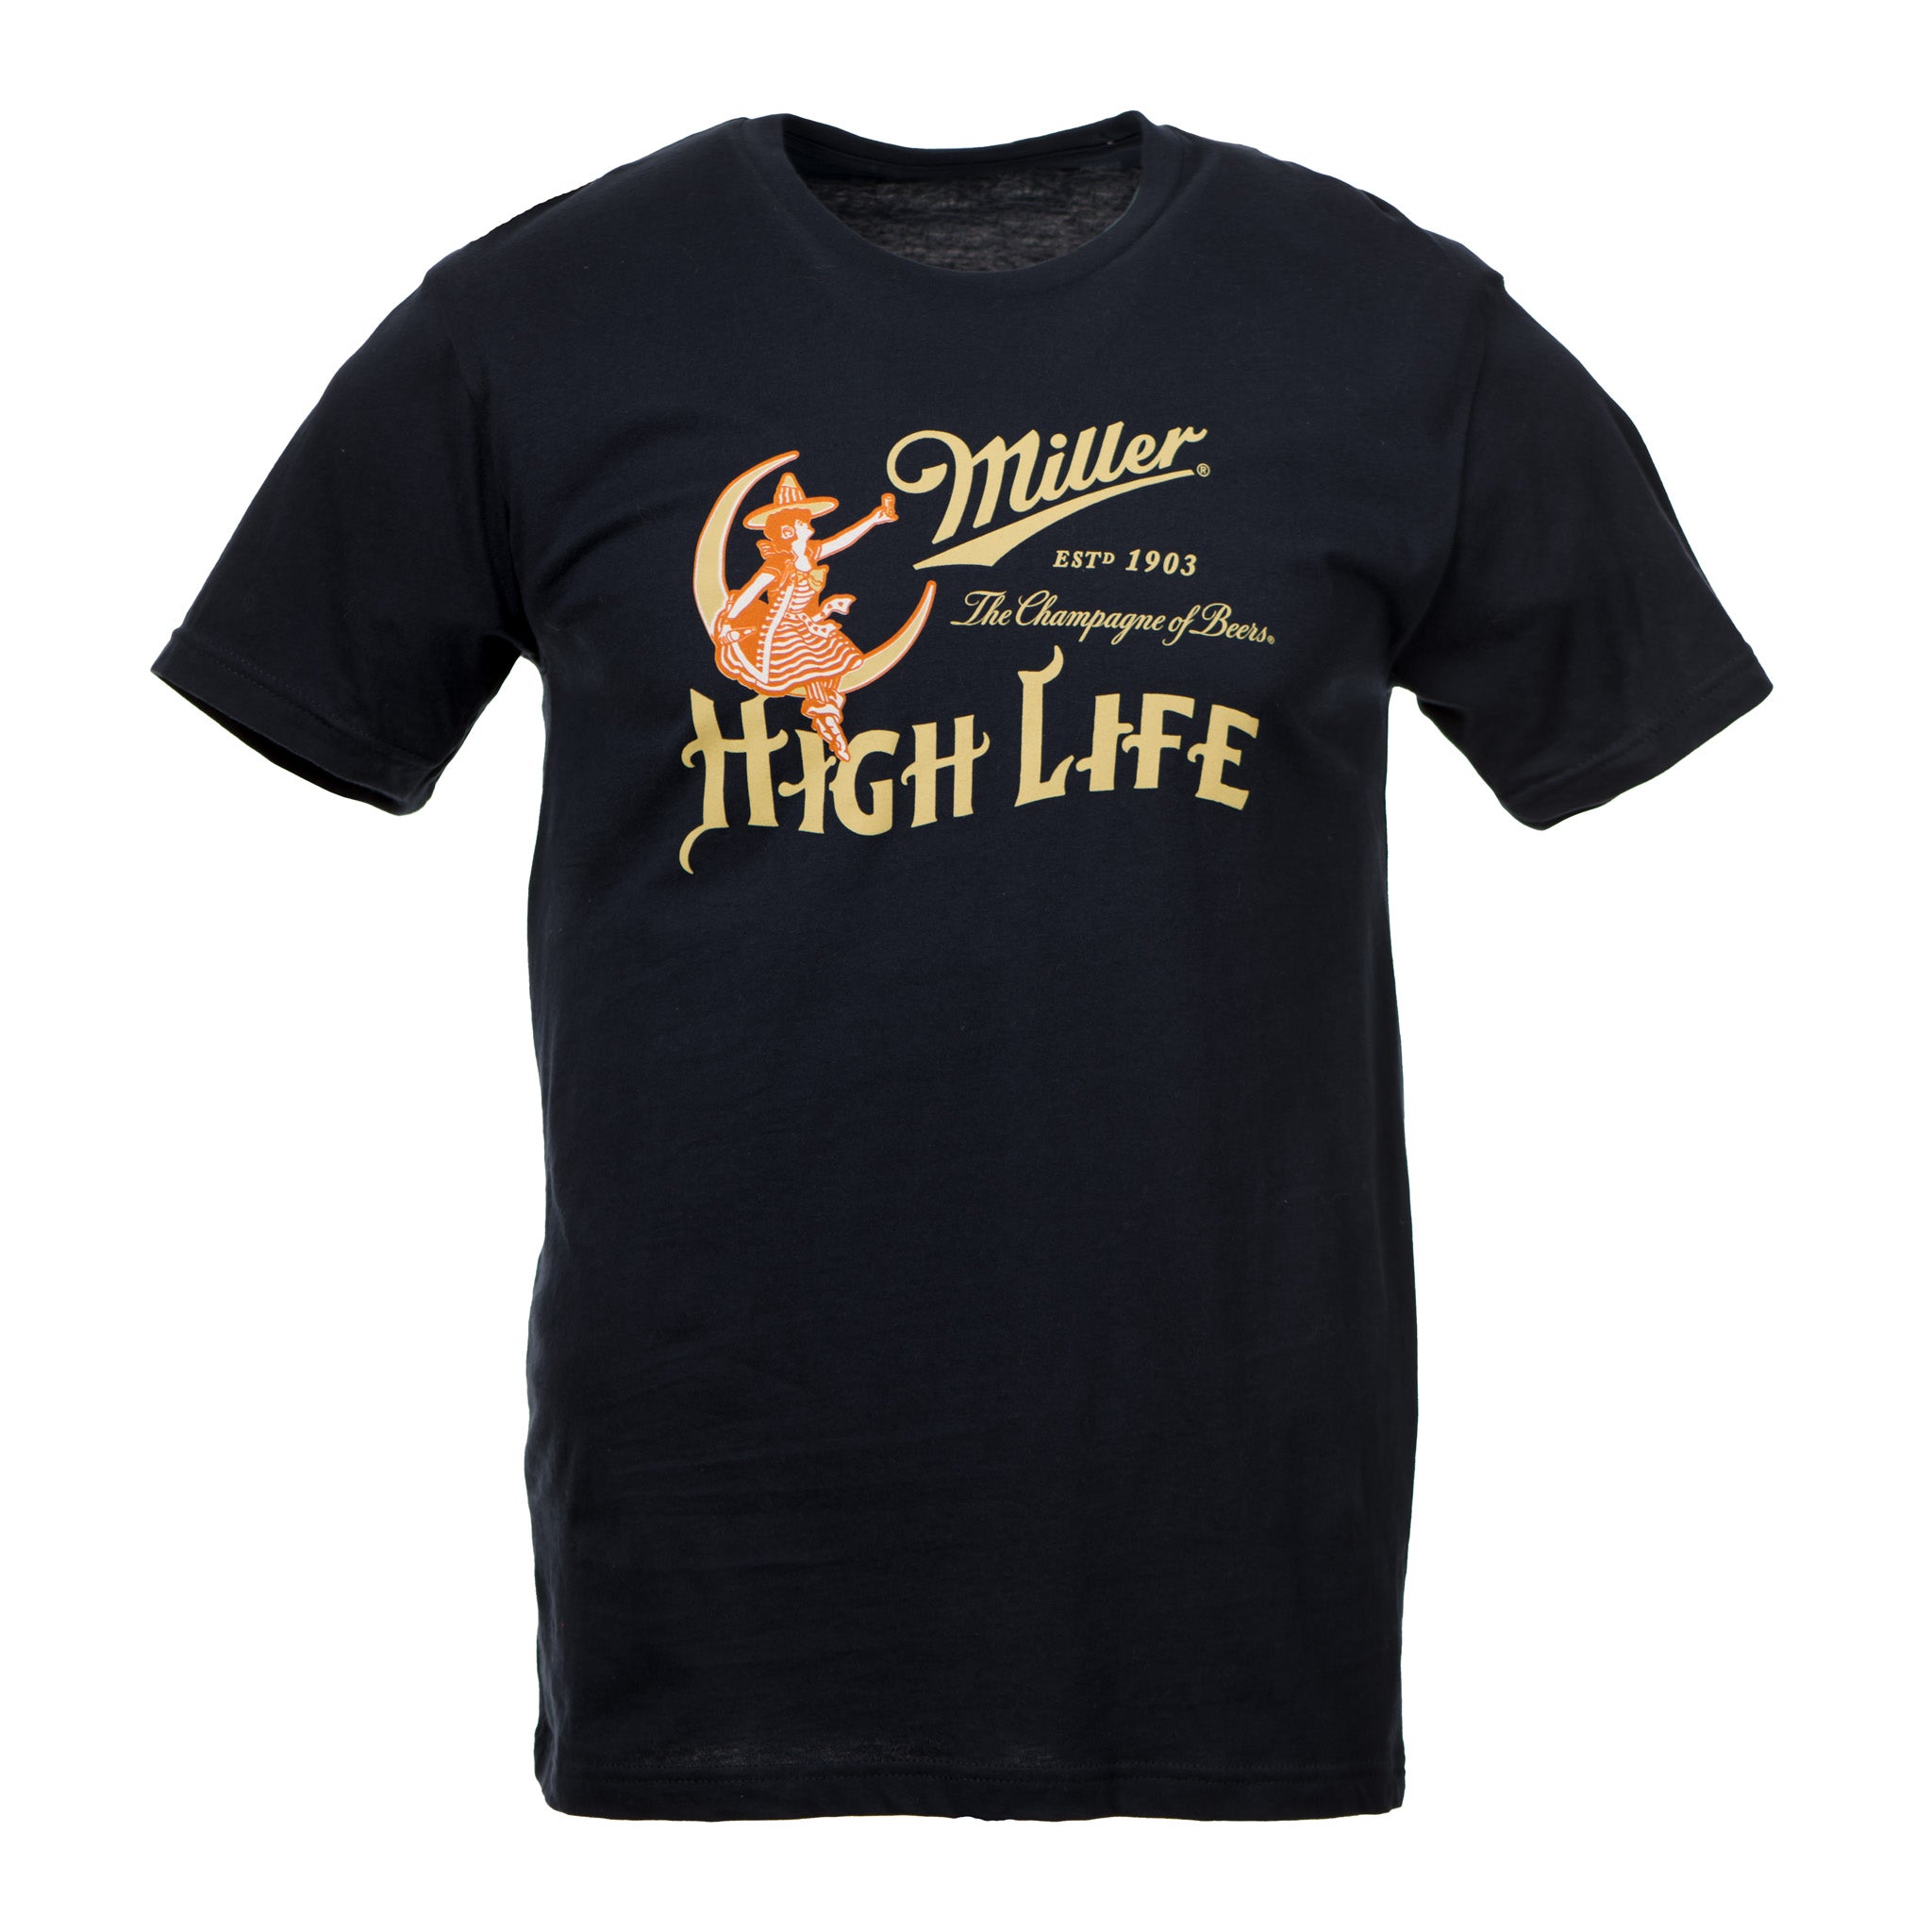 Miller High Life Logo White and Red Ringer Tee Shirt